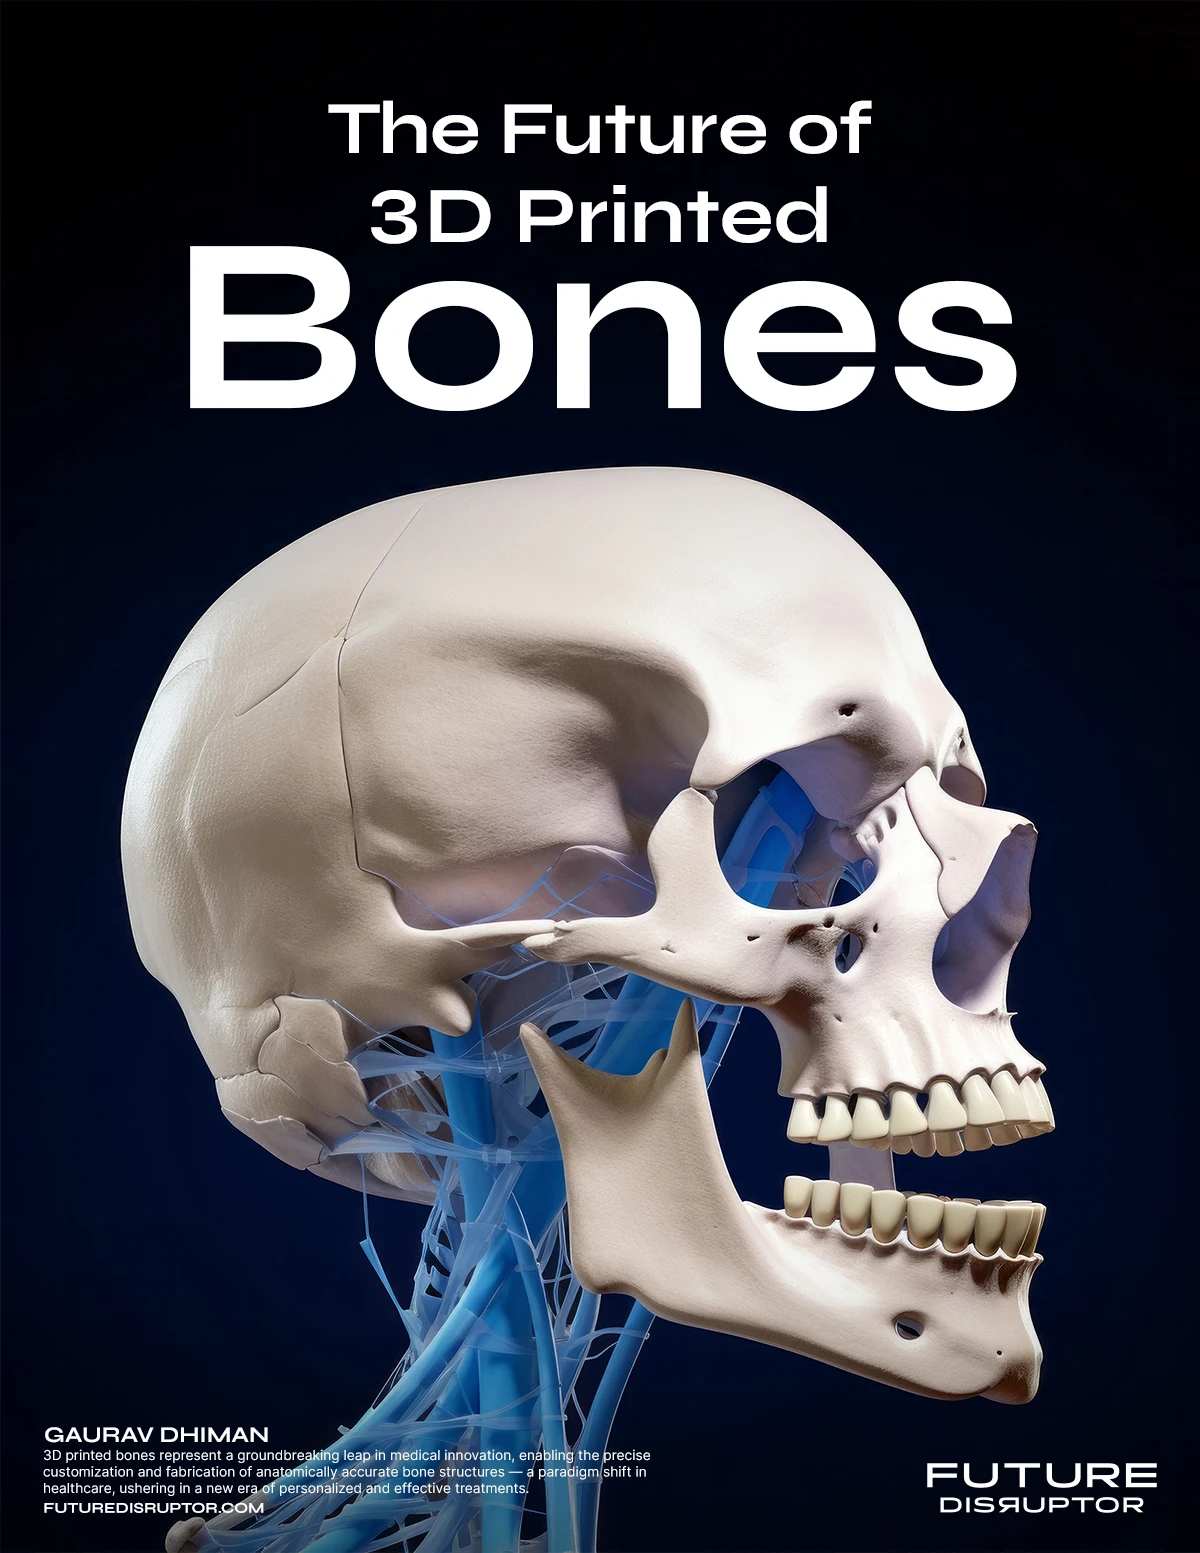 The Future of 3D Printed Bones